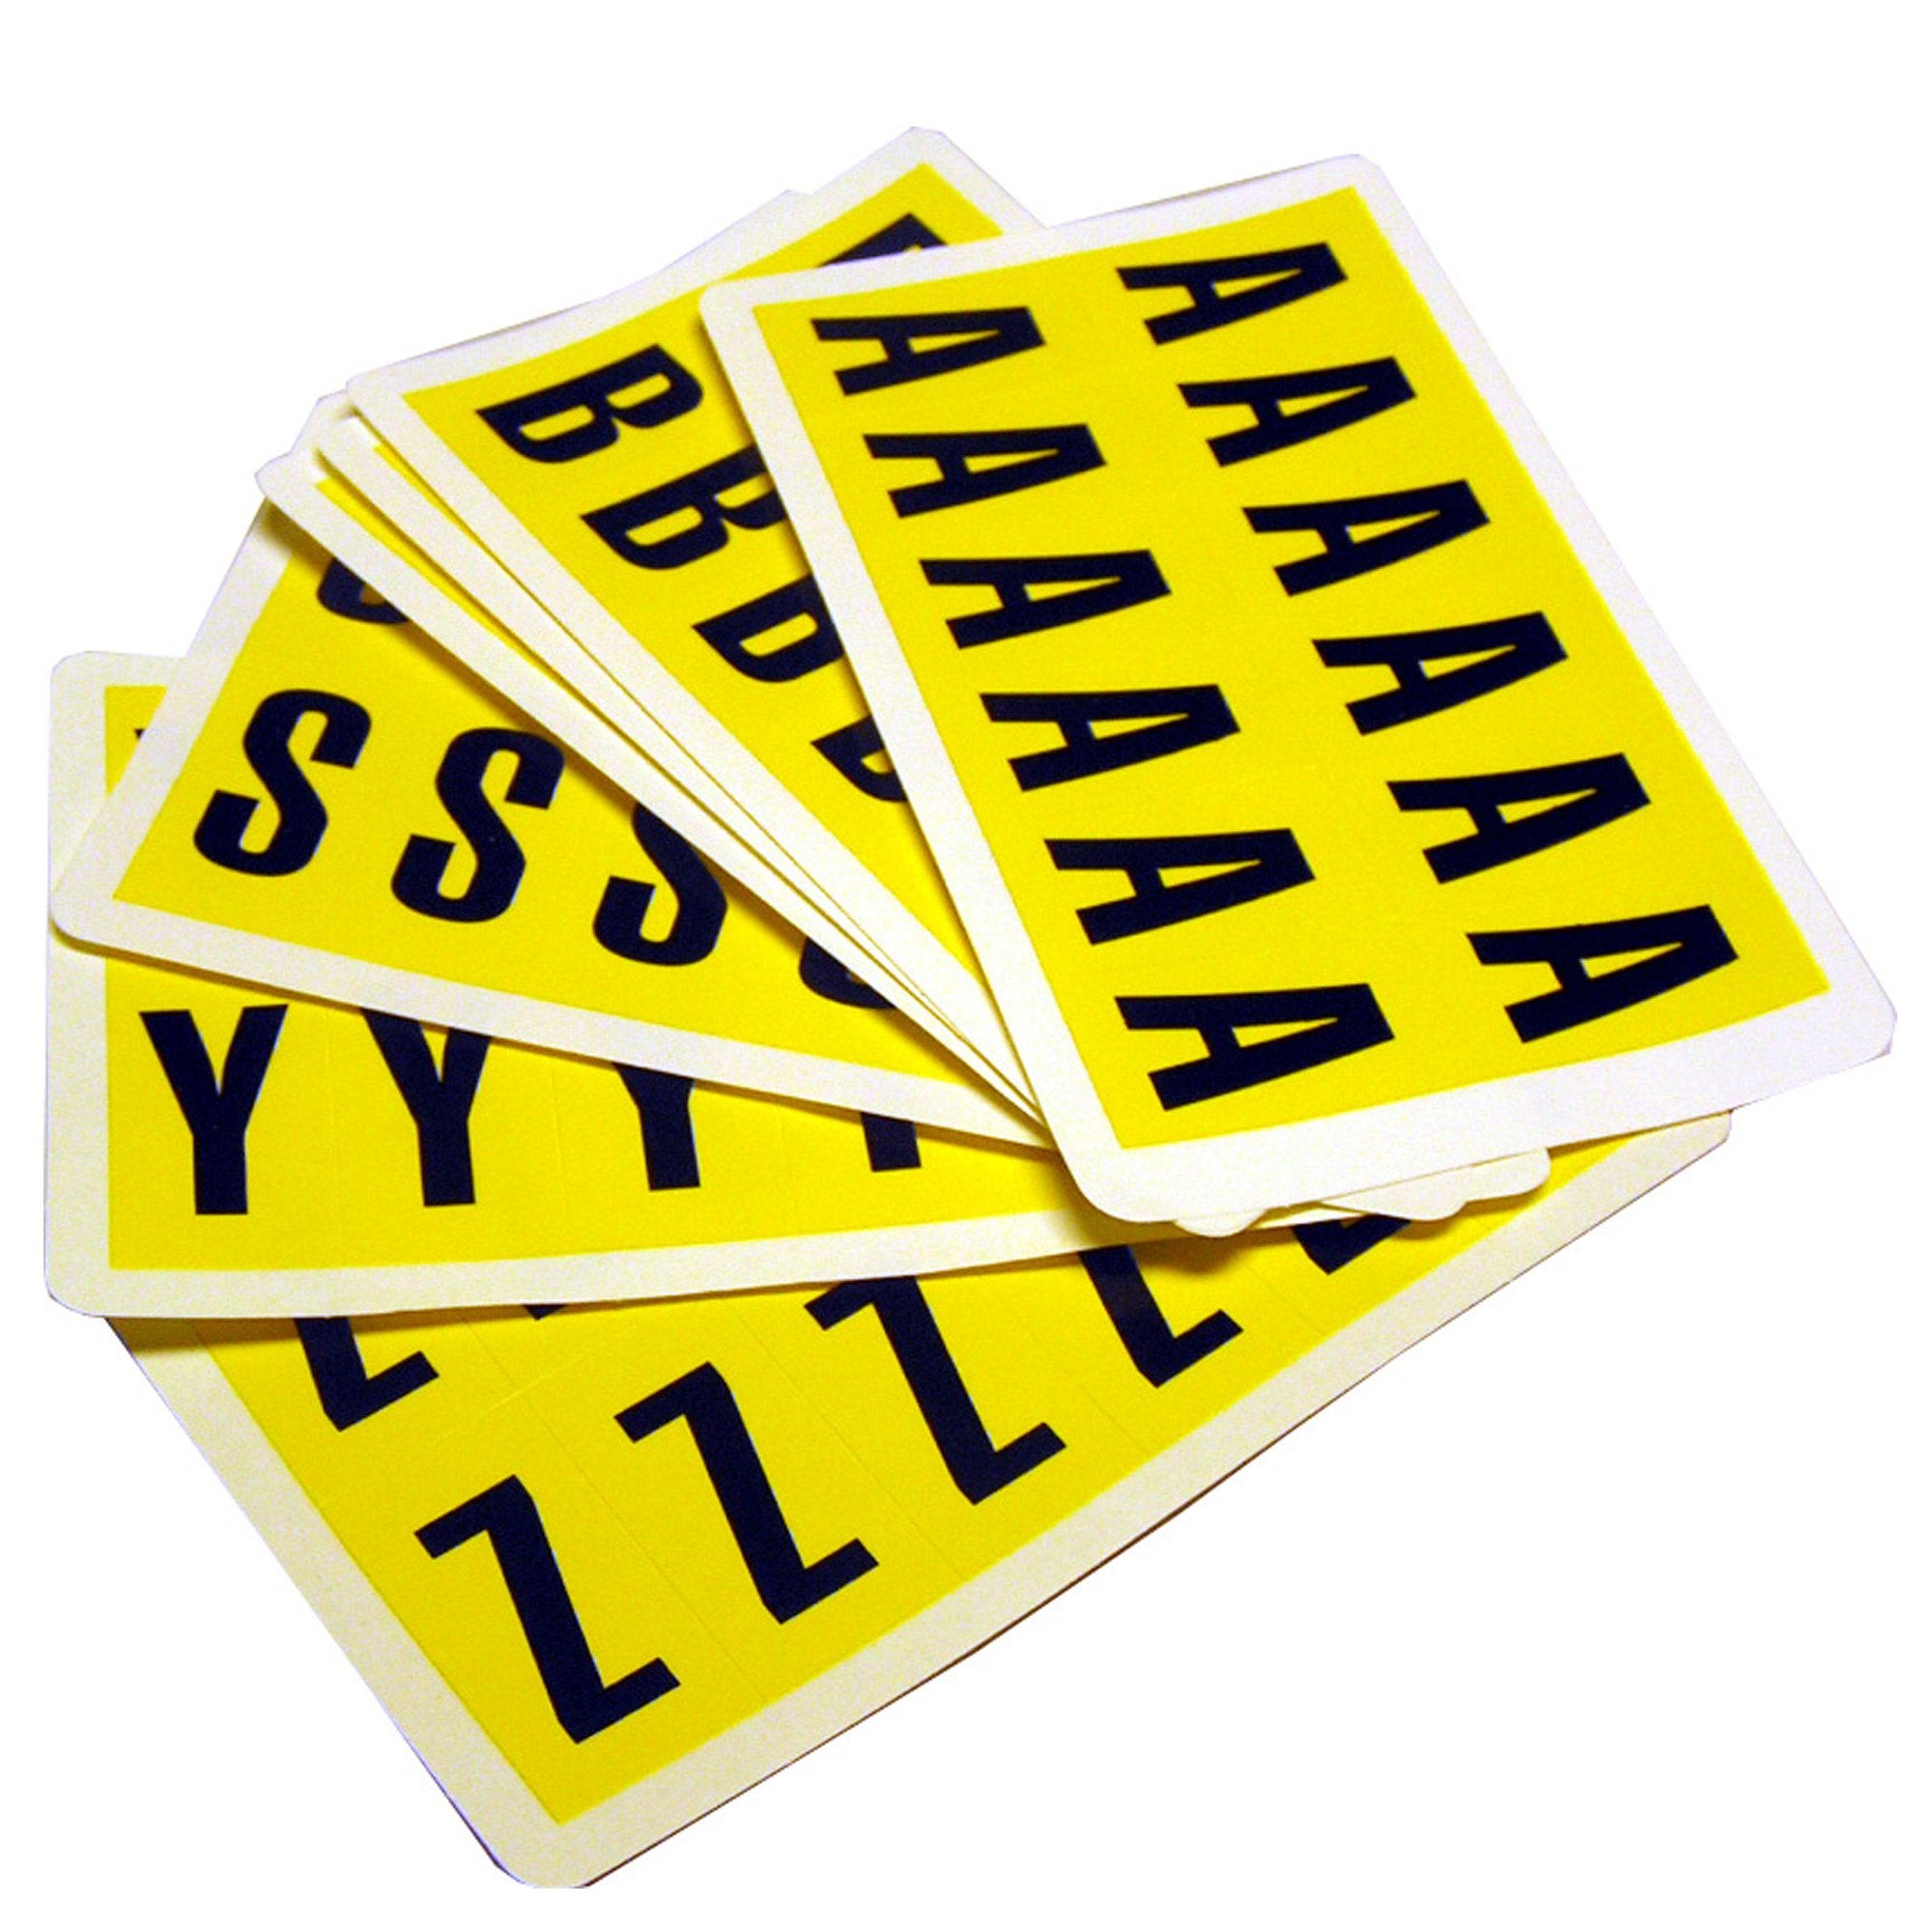 beaverswood-lettere-adesive-a-z-38-x-21mm-12et-fg-nero-giallo